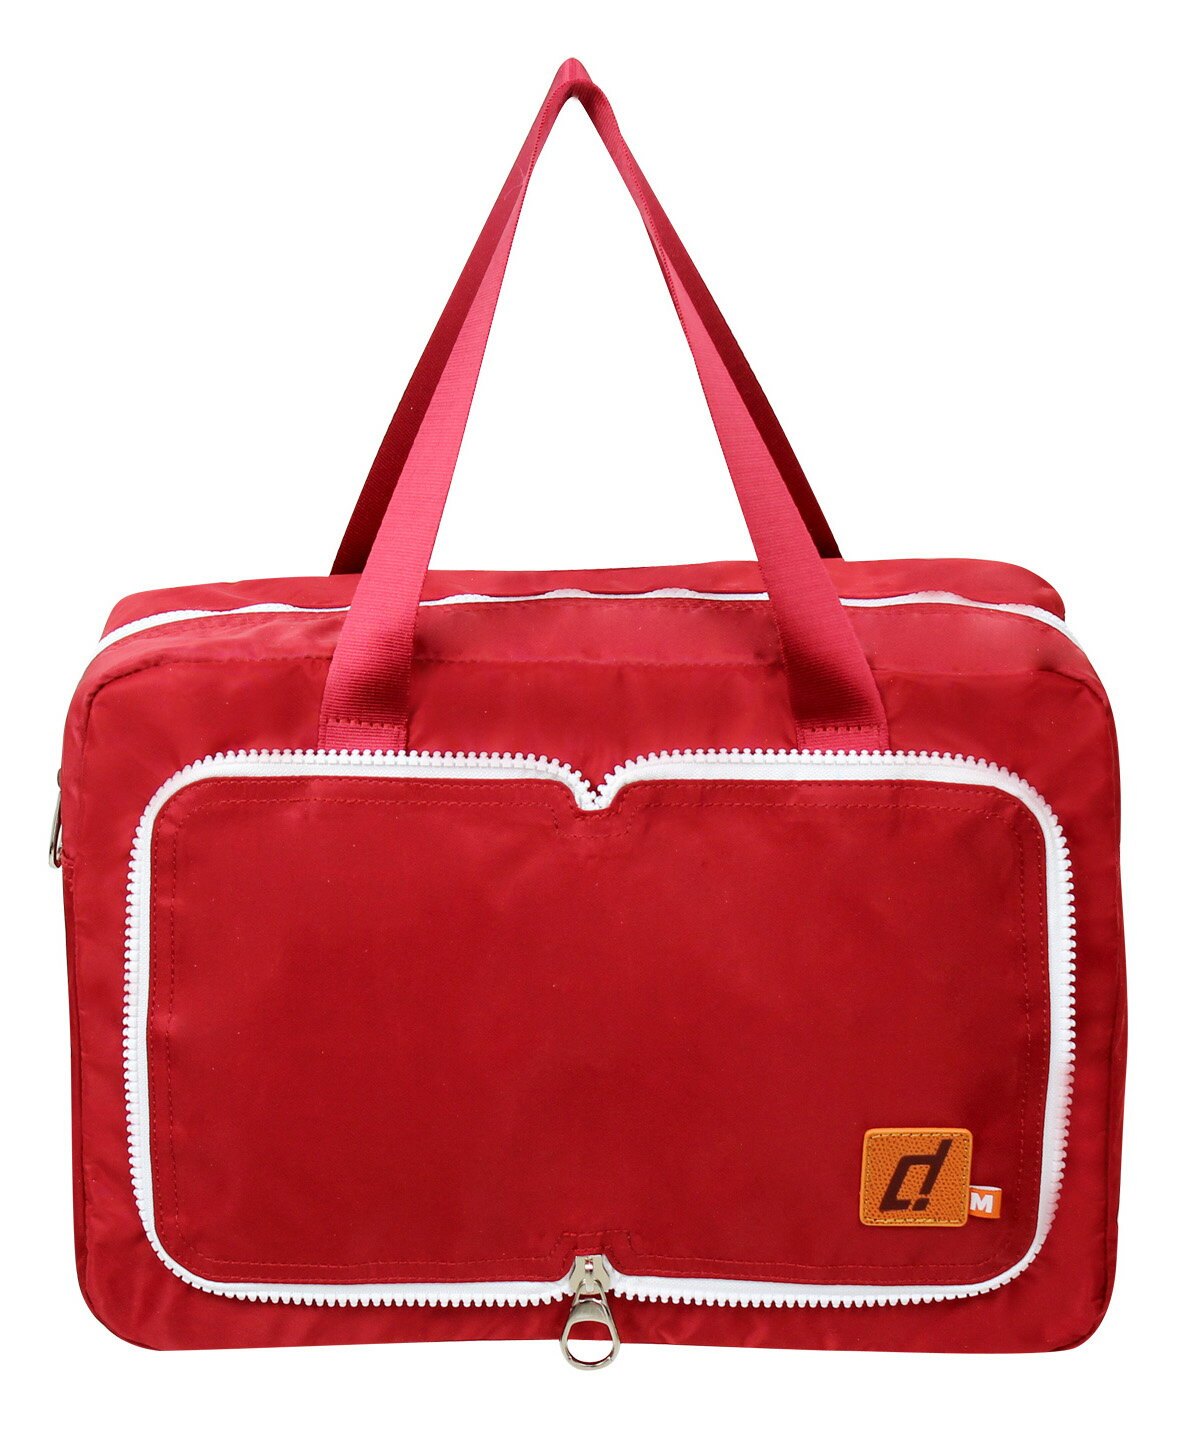 departure 旅行趣 收納/摺疊袋 萬用旅行便利摺疊帶-M紅